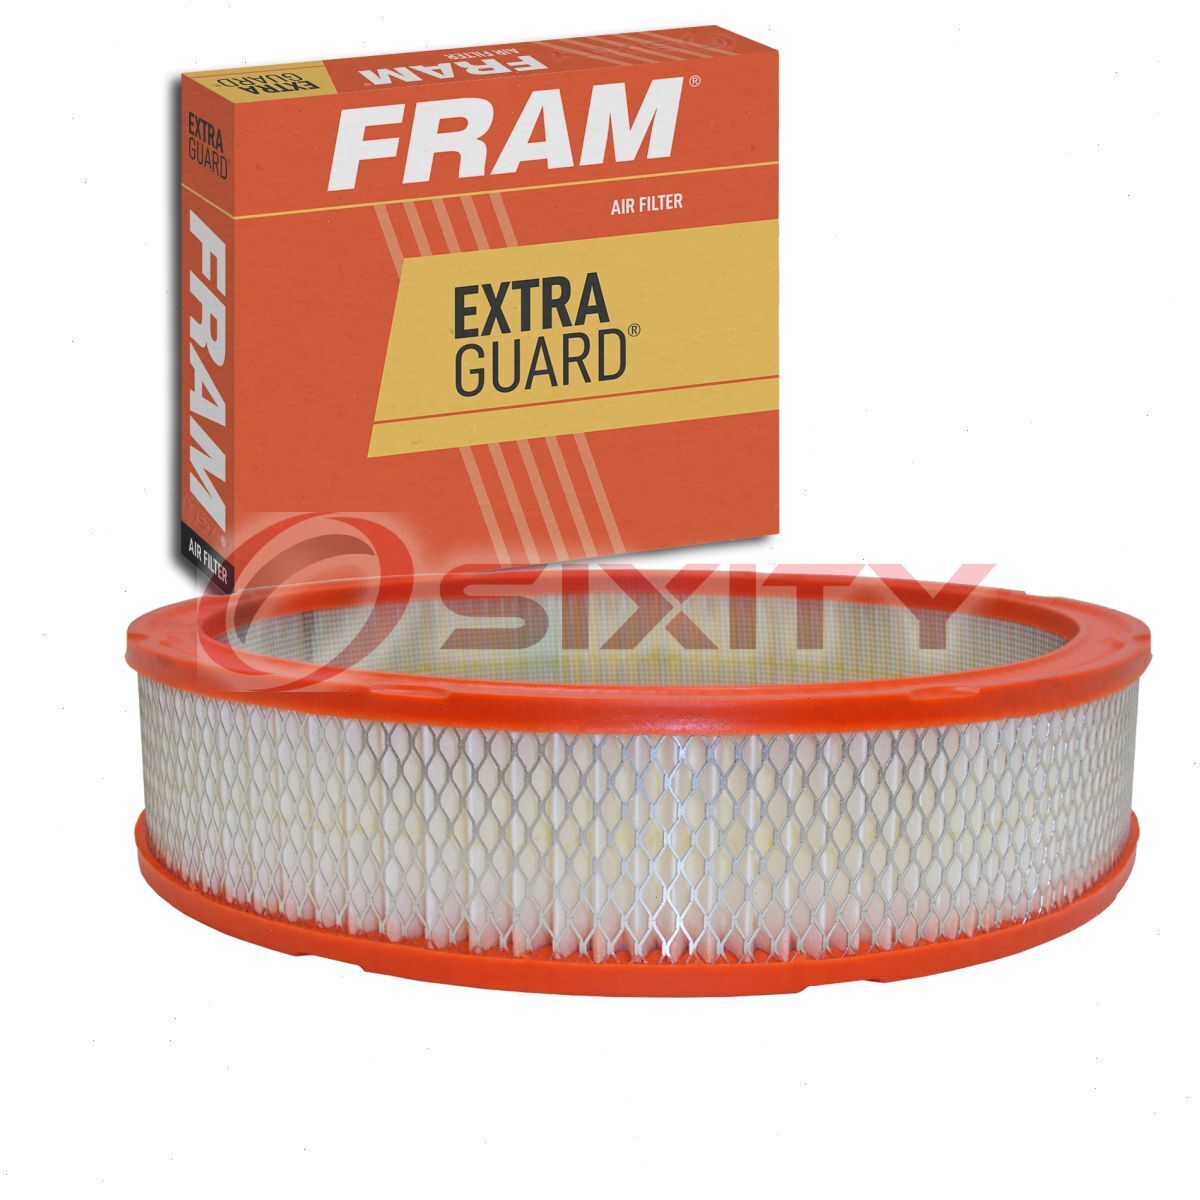 FRAM Extra Guard Air Filter for 1980-1982 Dodge Mirada Intake Inlet Manifold zm